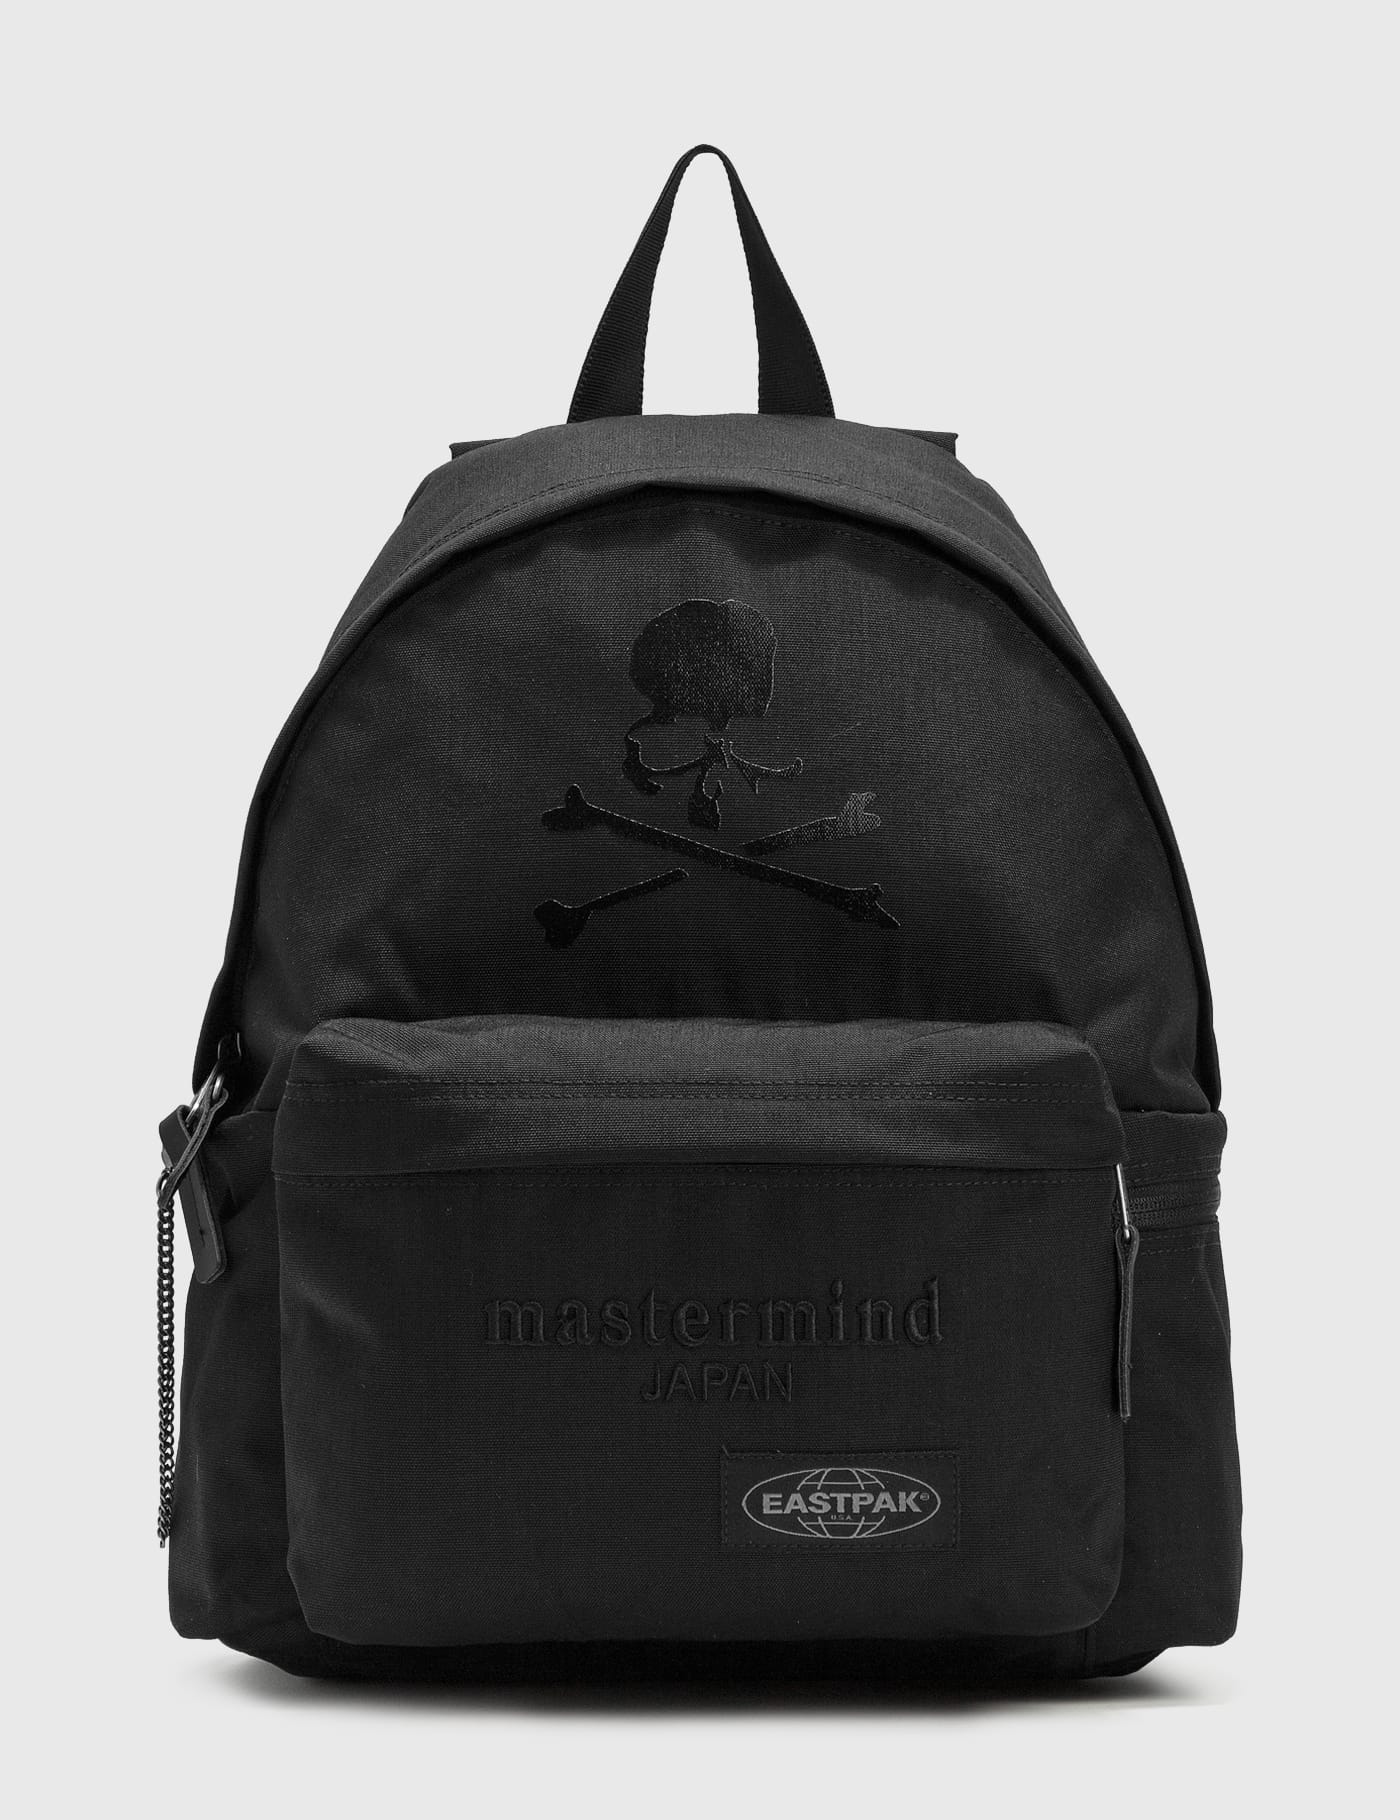 Mastermind Japan - Mastermind Japan x Eastpak Backpack | HBX